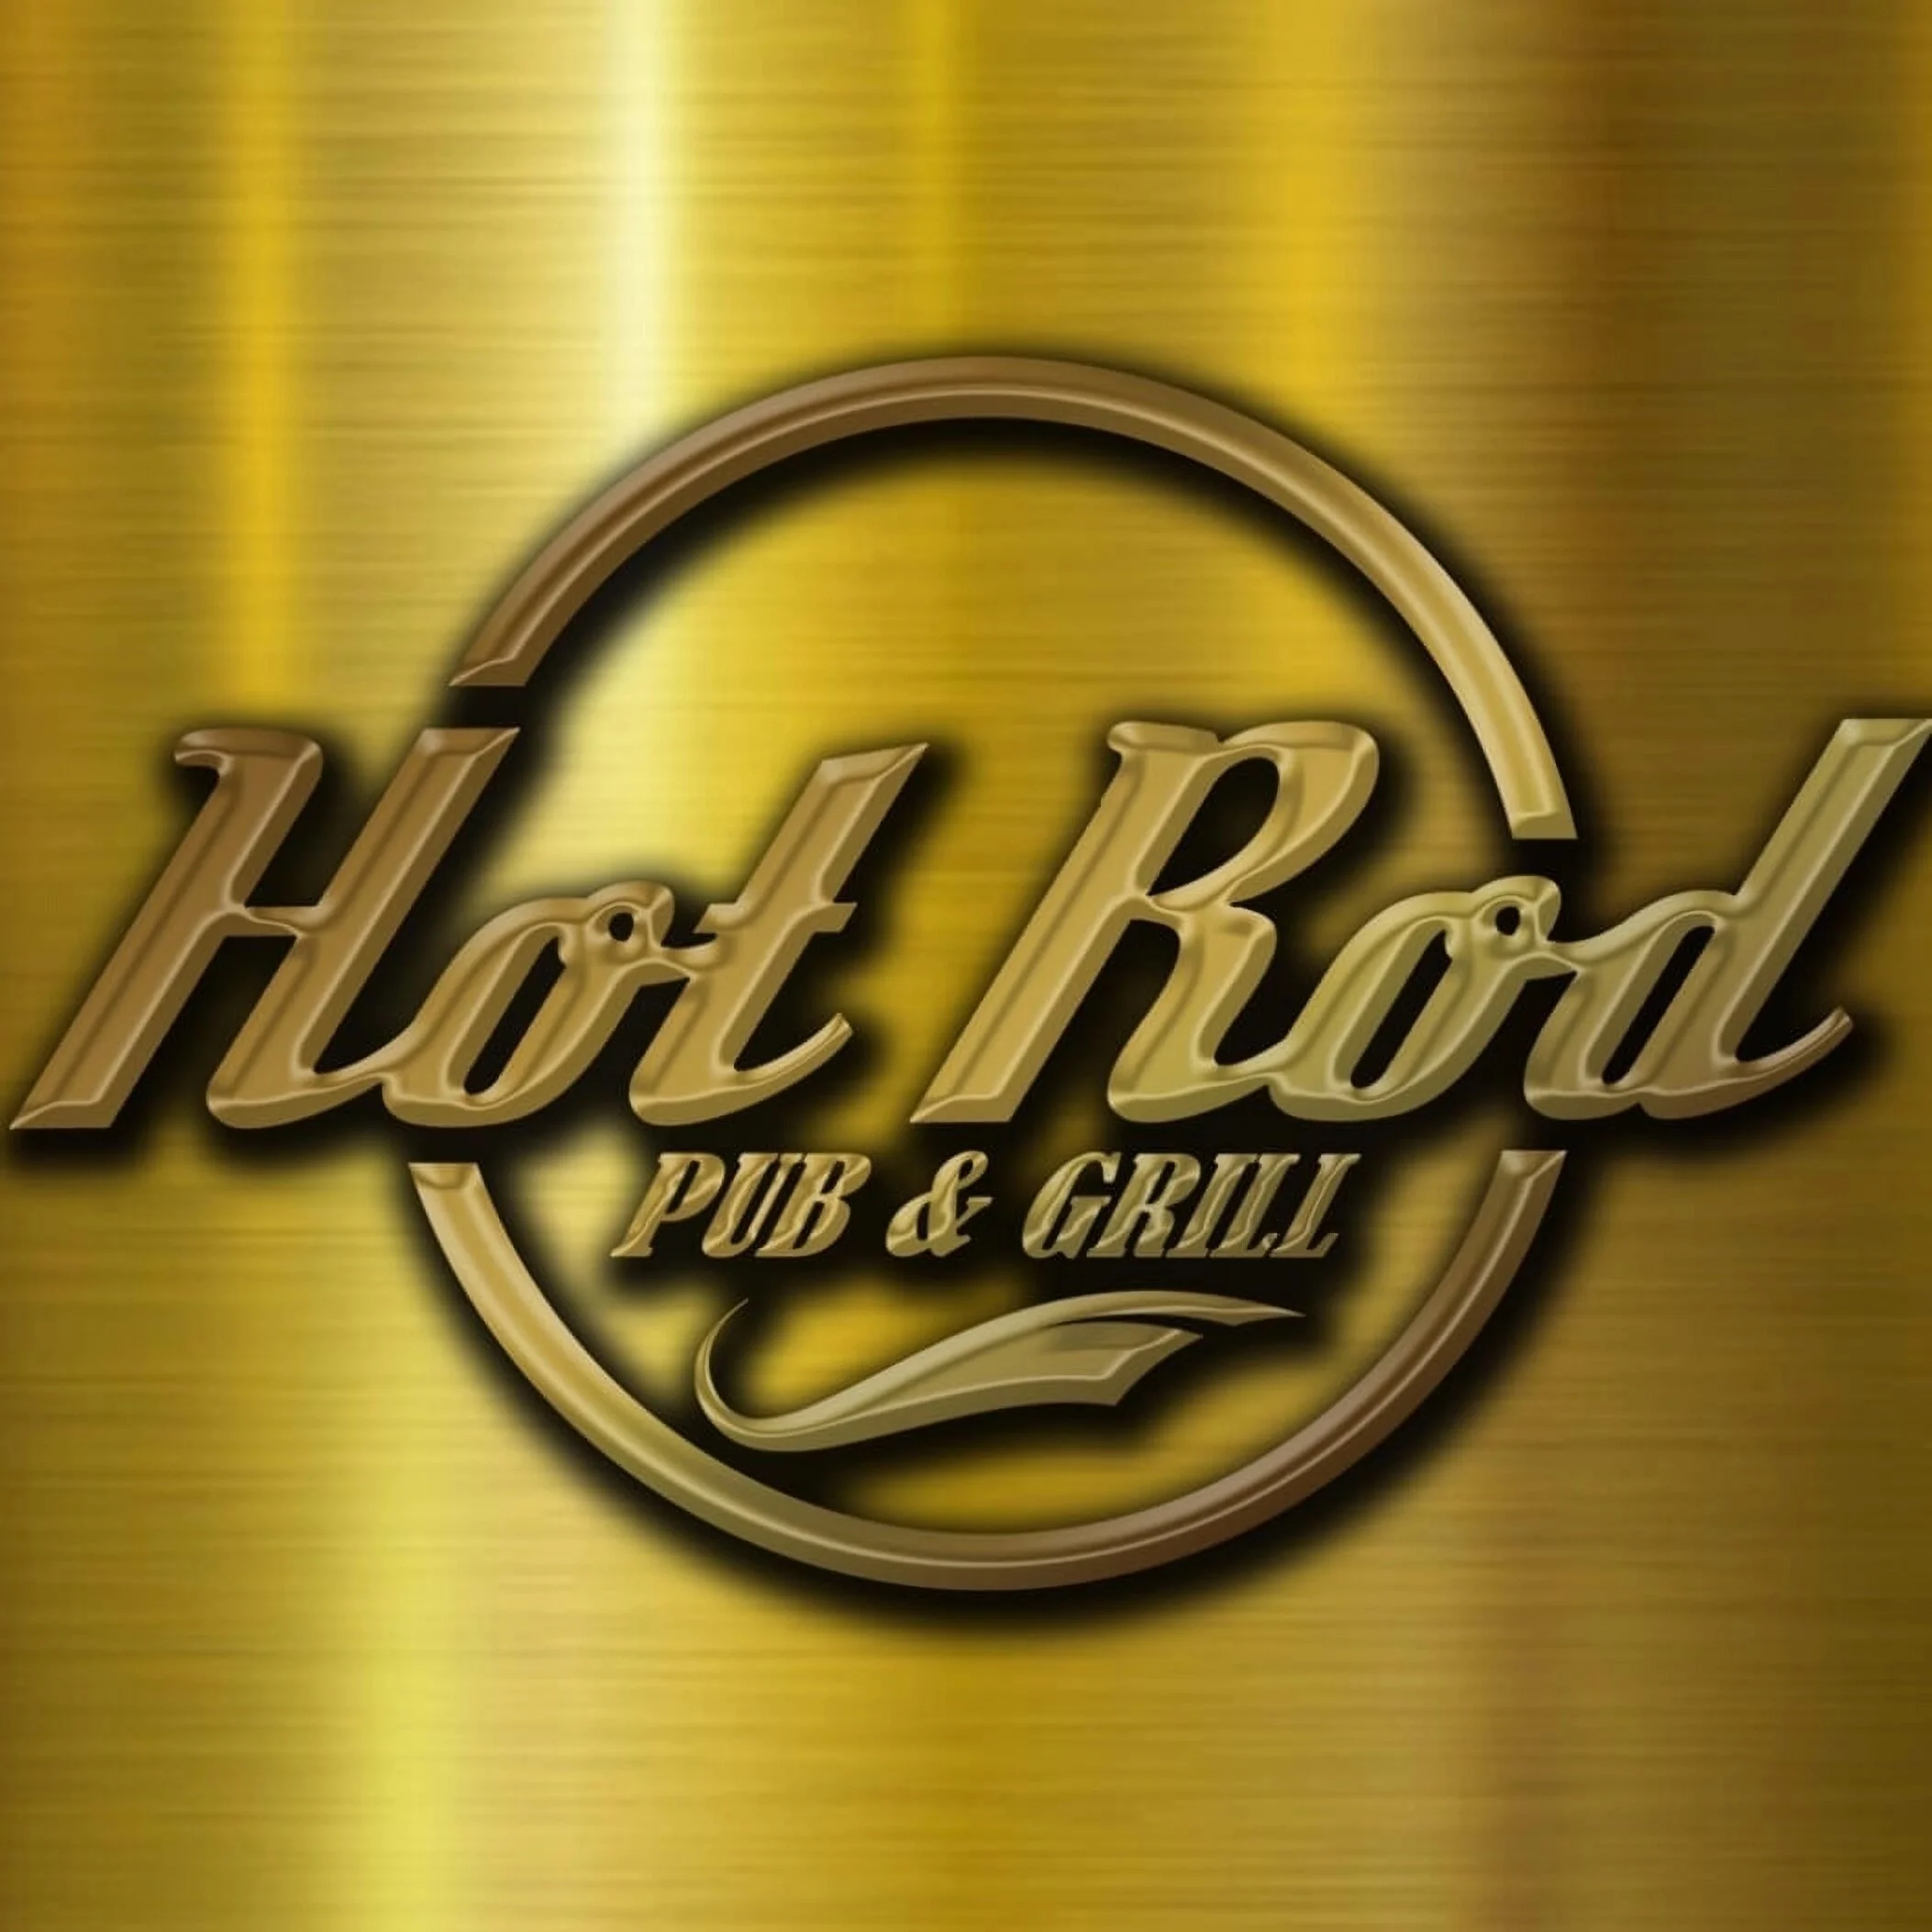 Restaurantes-hot-rod-ambato-18288